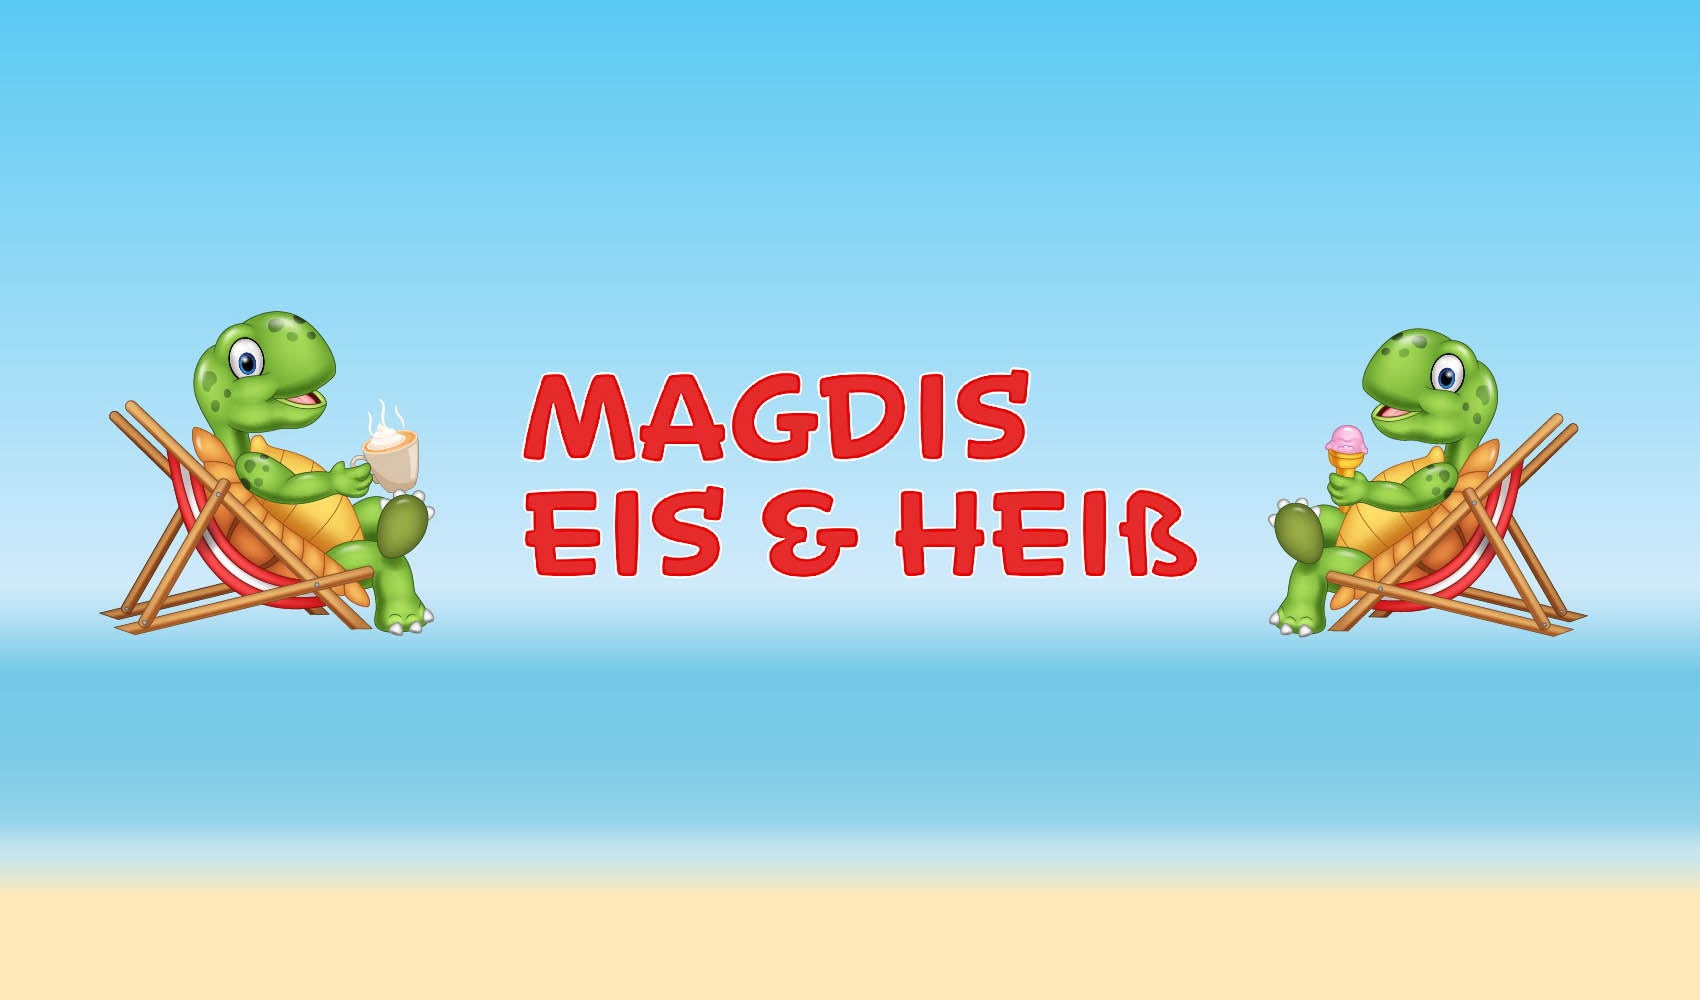 (c) Magdis-eis-heiss.de